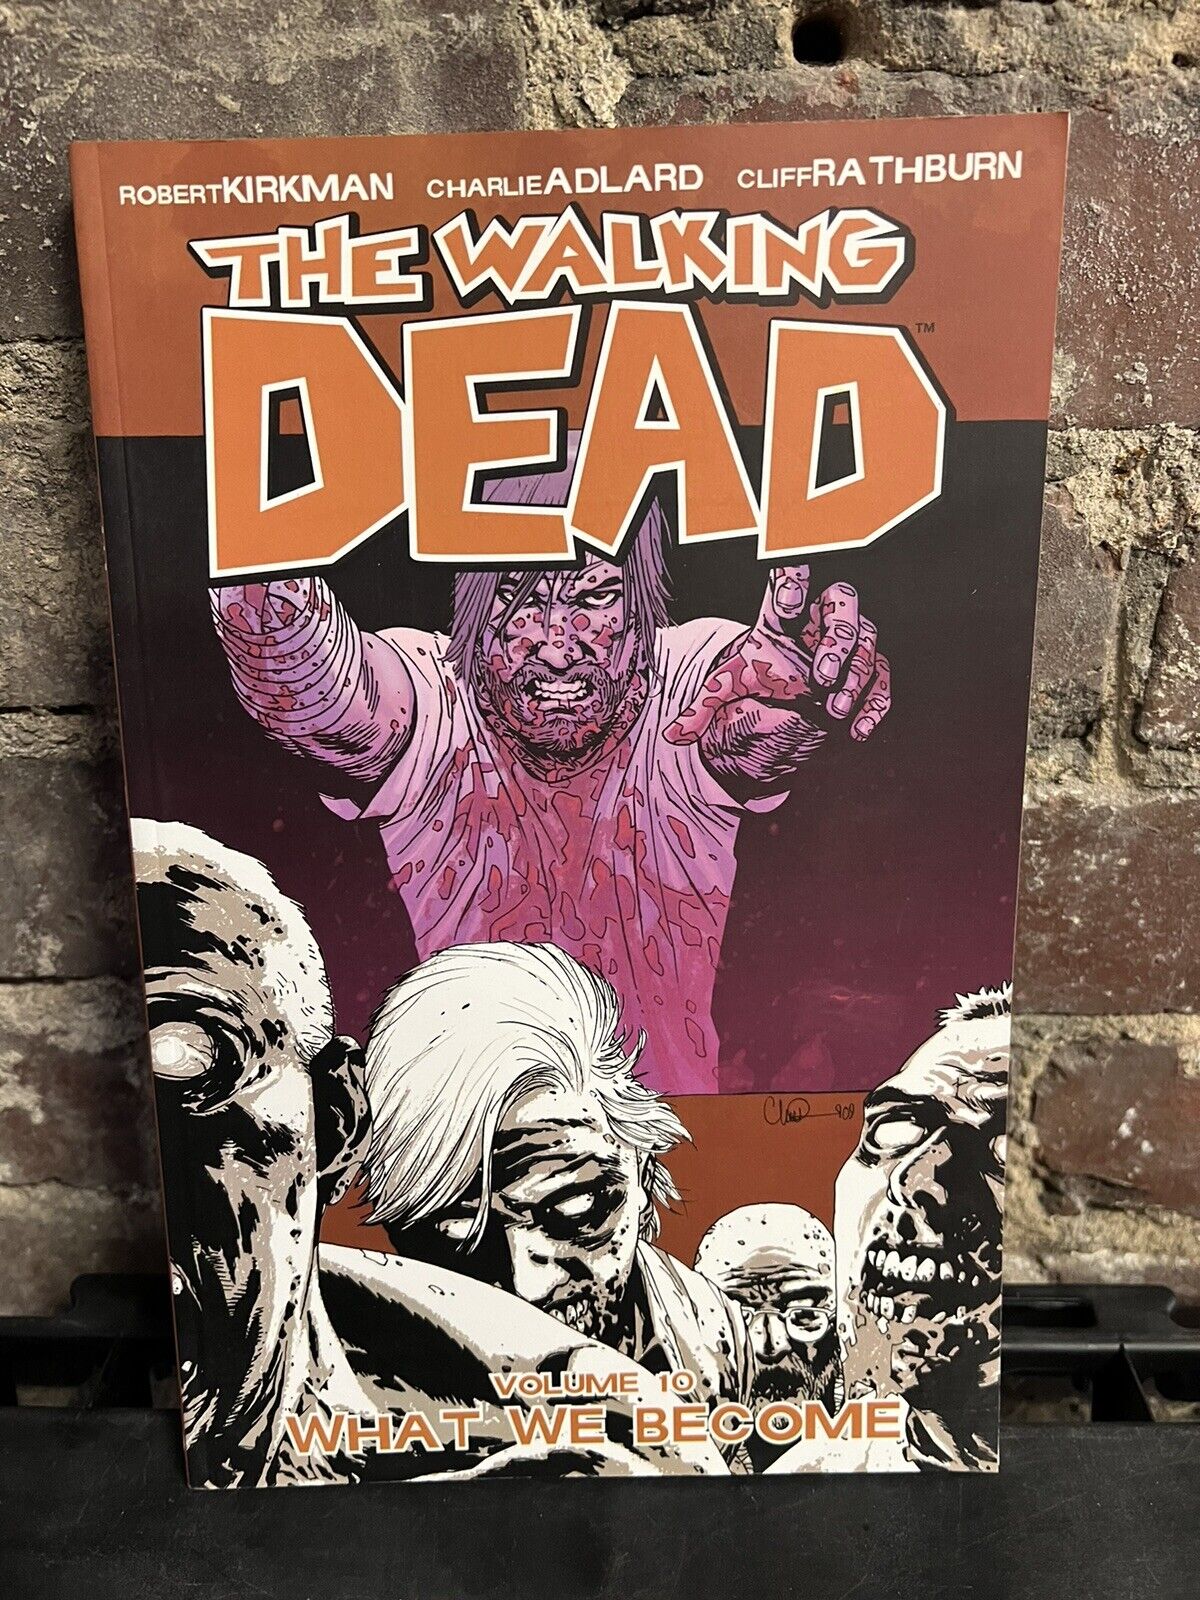 The Walking Dead - Image Trade Paperback - Volume 10